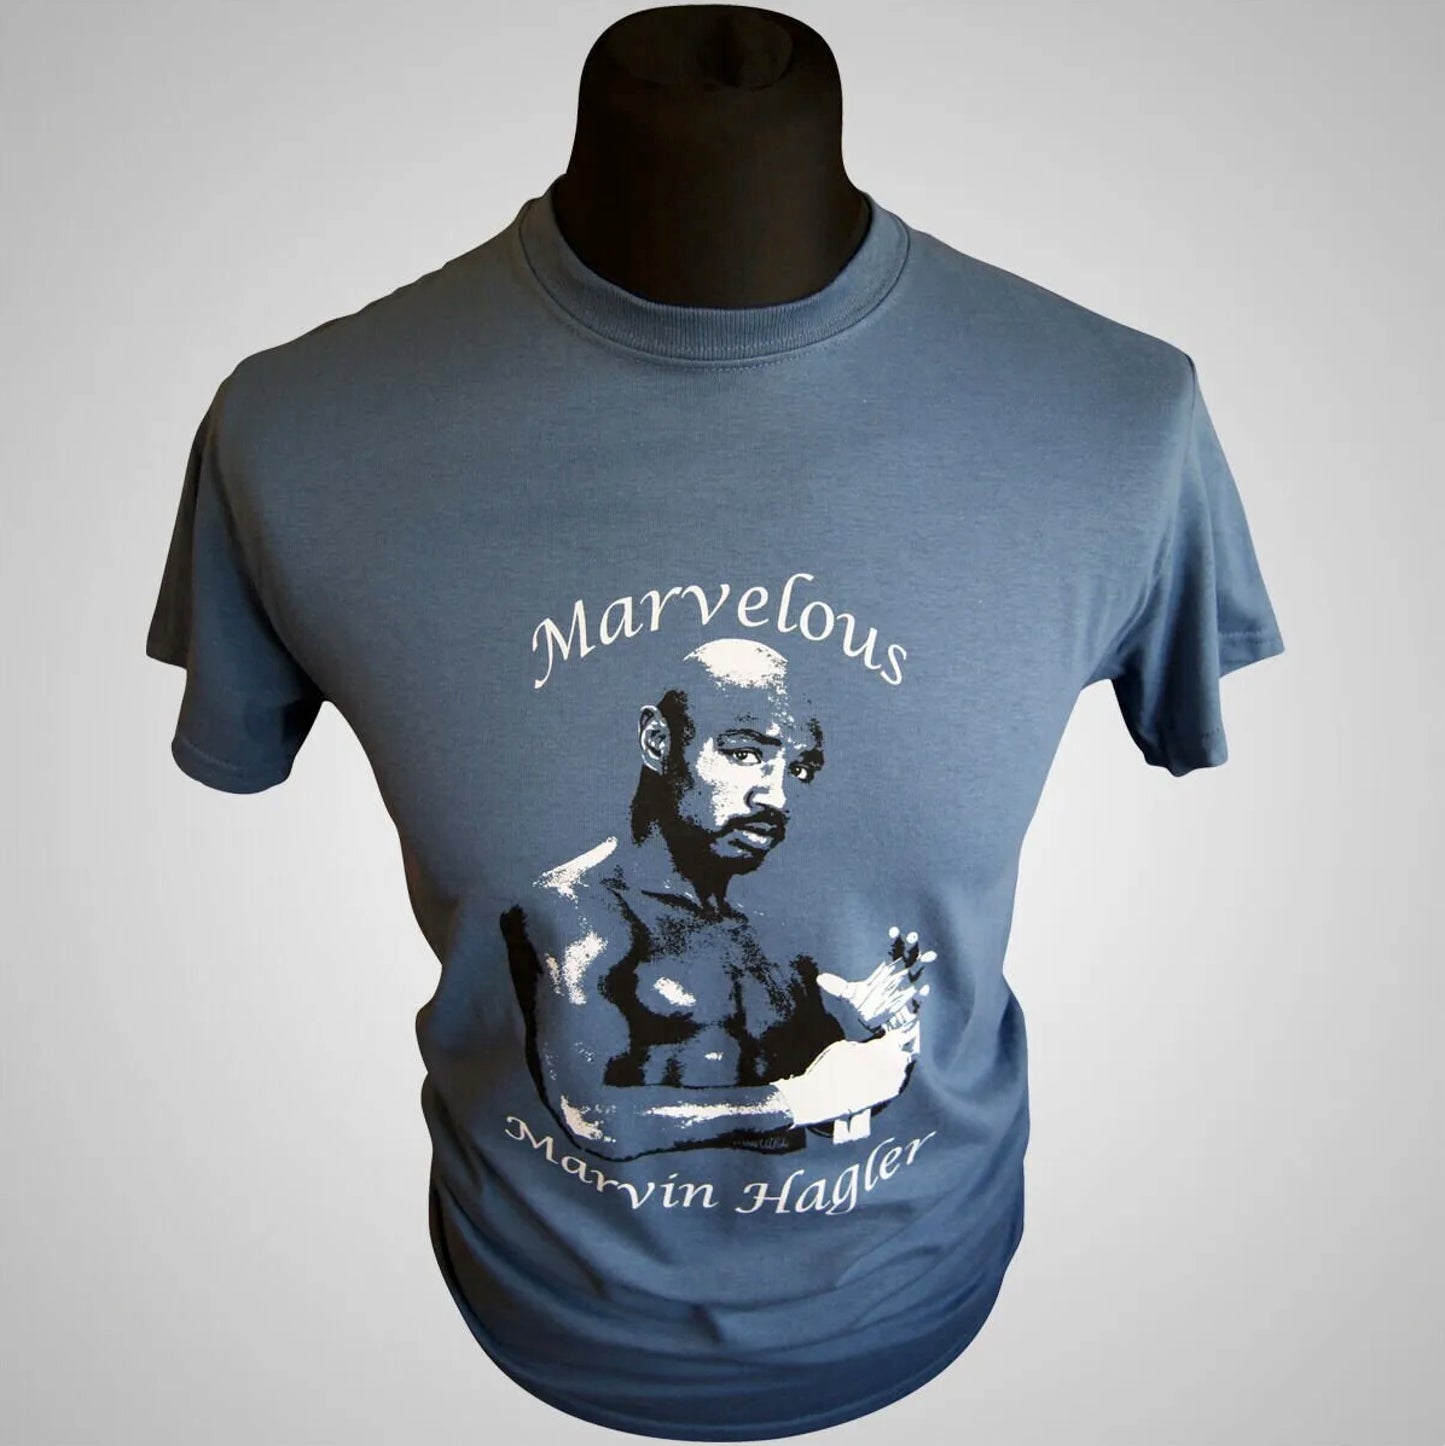 Marvelous Marvin Hagler T Shirt